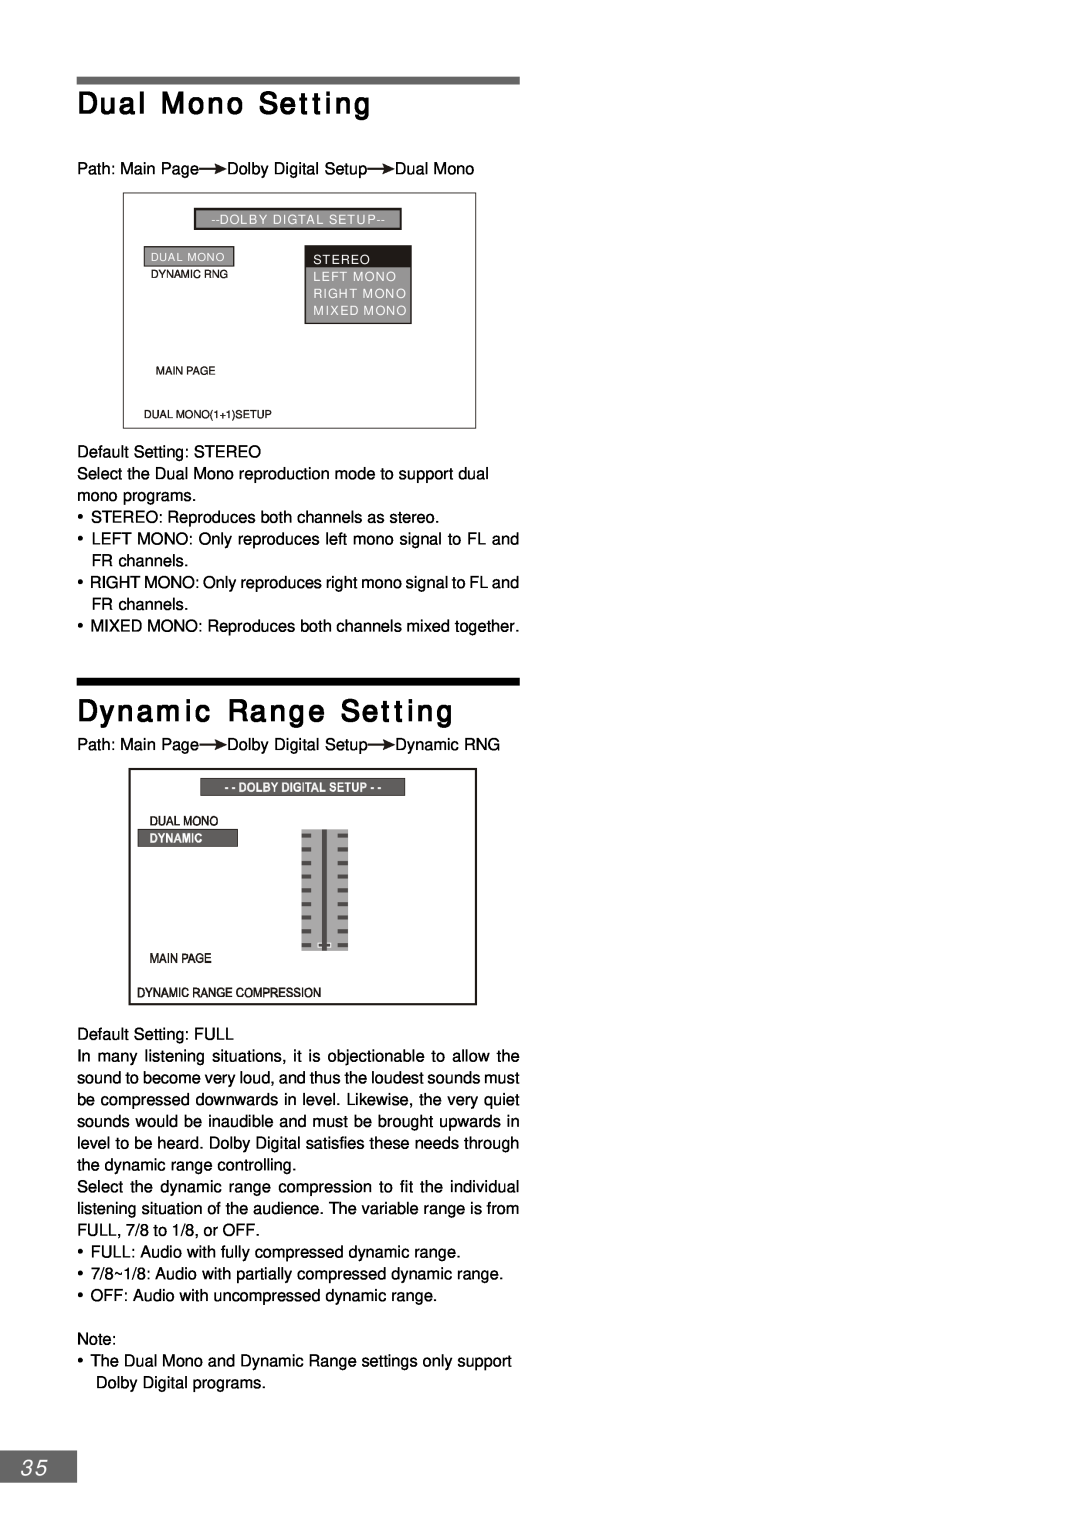 Emerson AV301 owner manual Dual Mono Setting, Dynamic Range Setting 